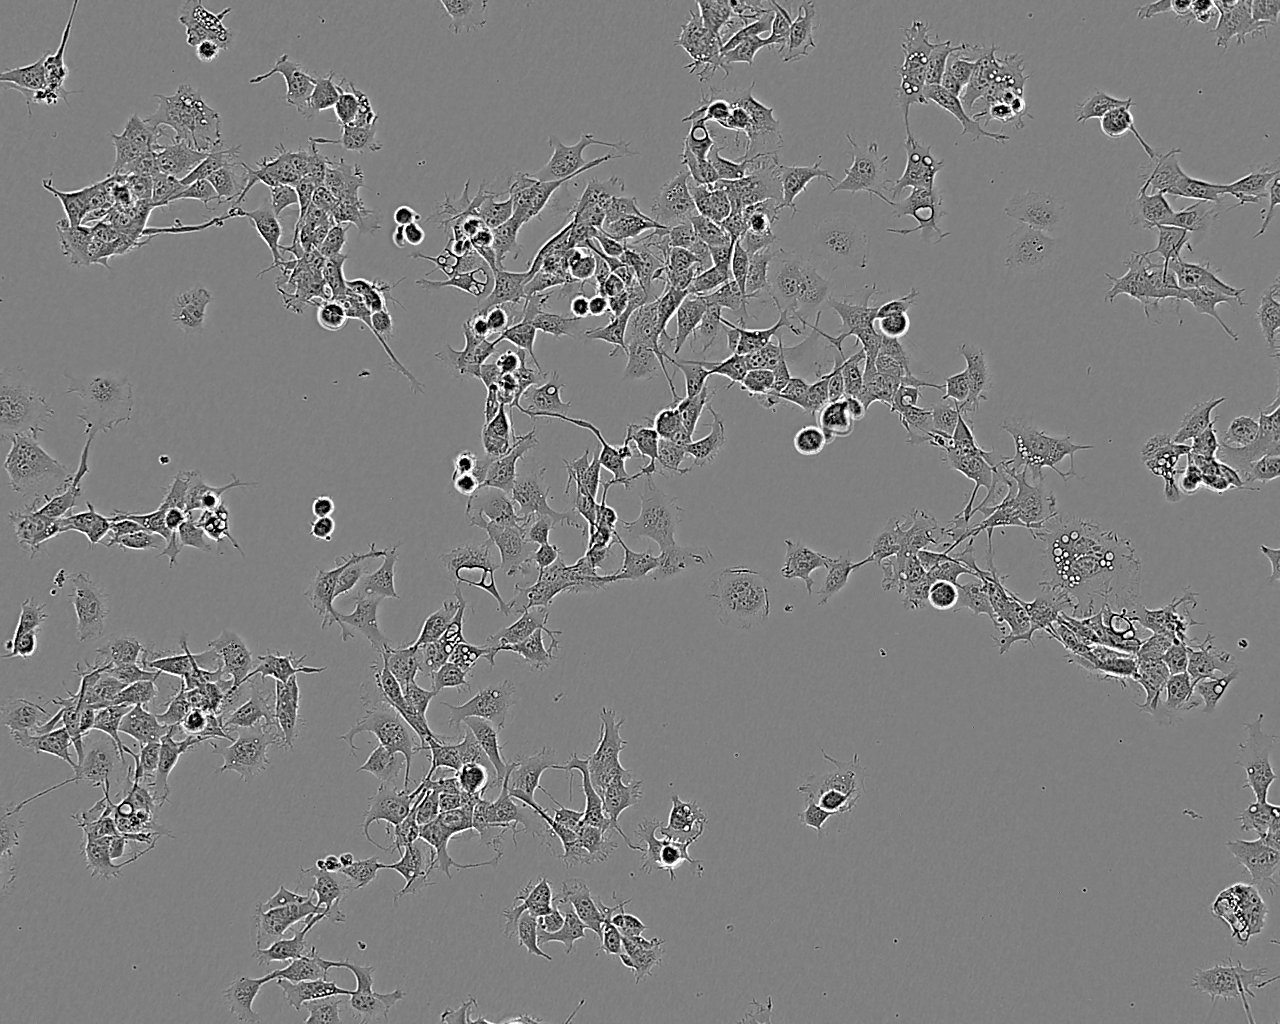 3T3-Swiss albino Adherent小鼠胚胎成纤维细胞系